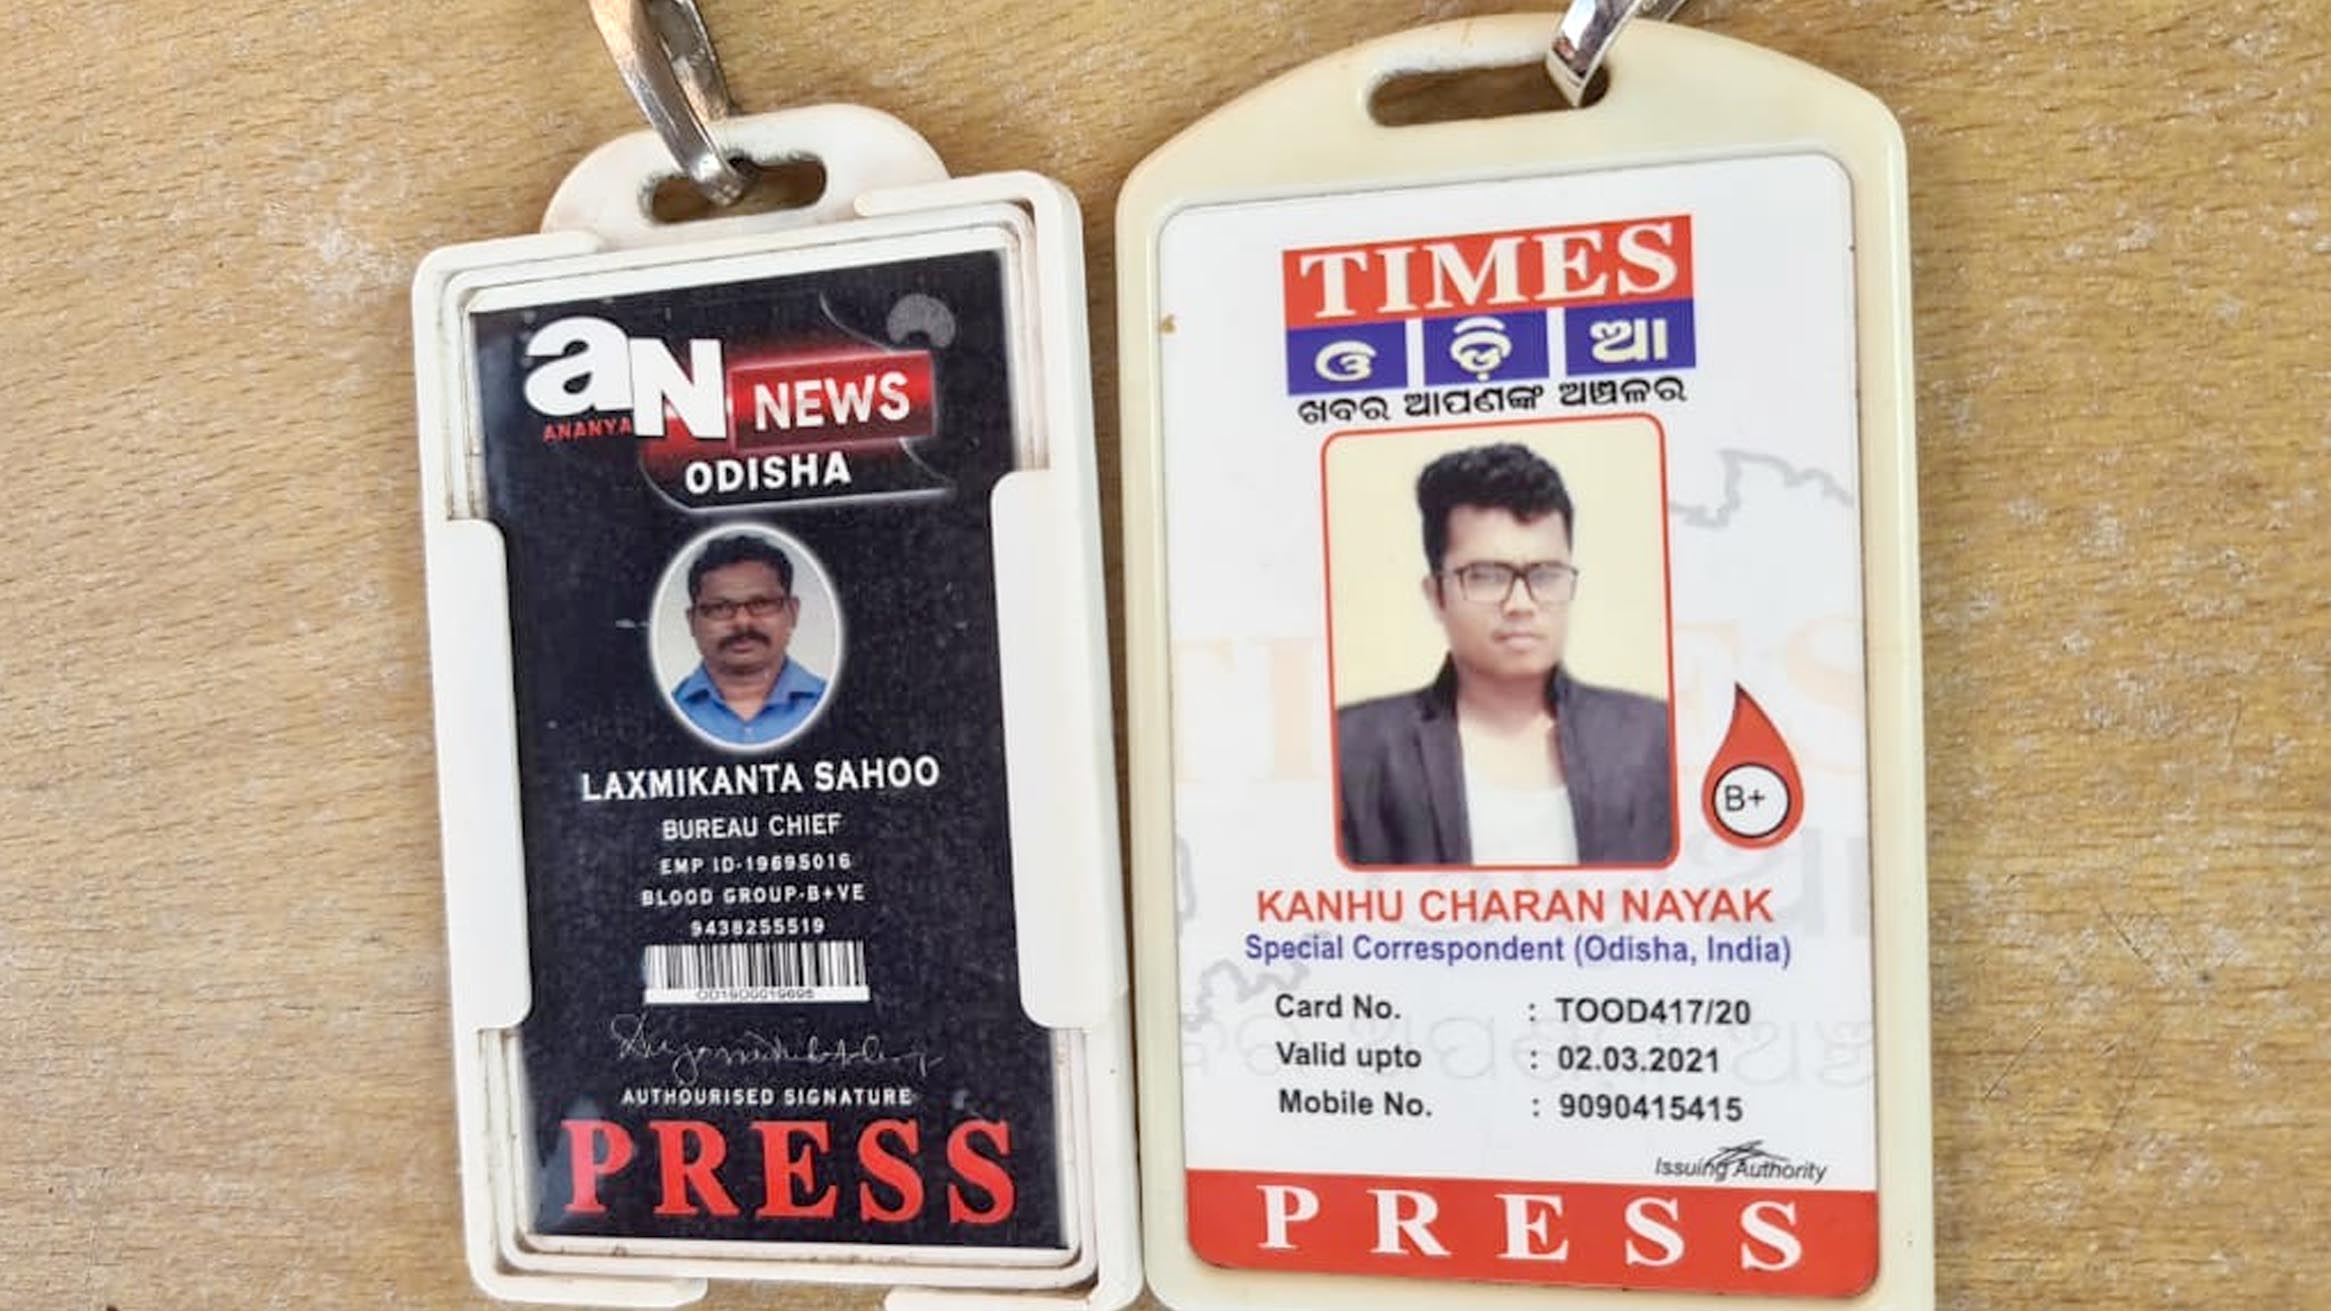 6 web portal journalists arrested in Bhubaneswar